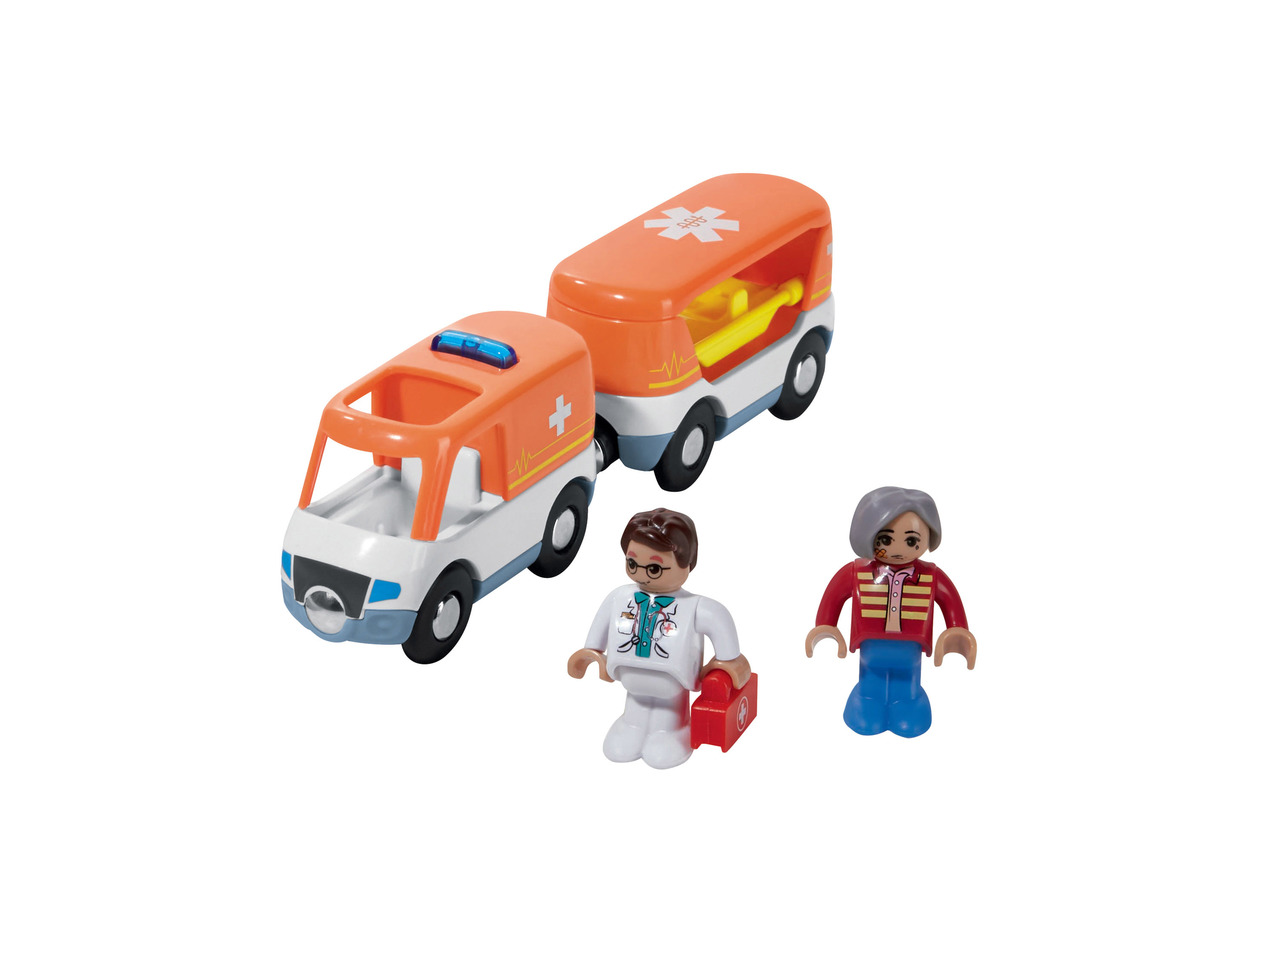 PLAYTIVE JUNIOR Toy Emergency Vehicles